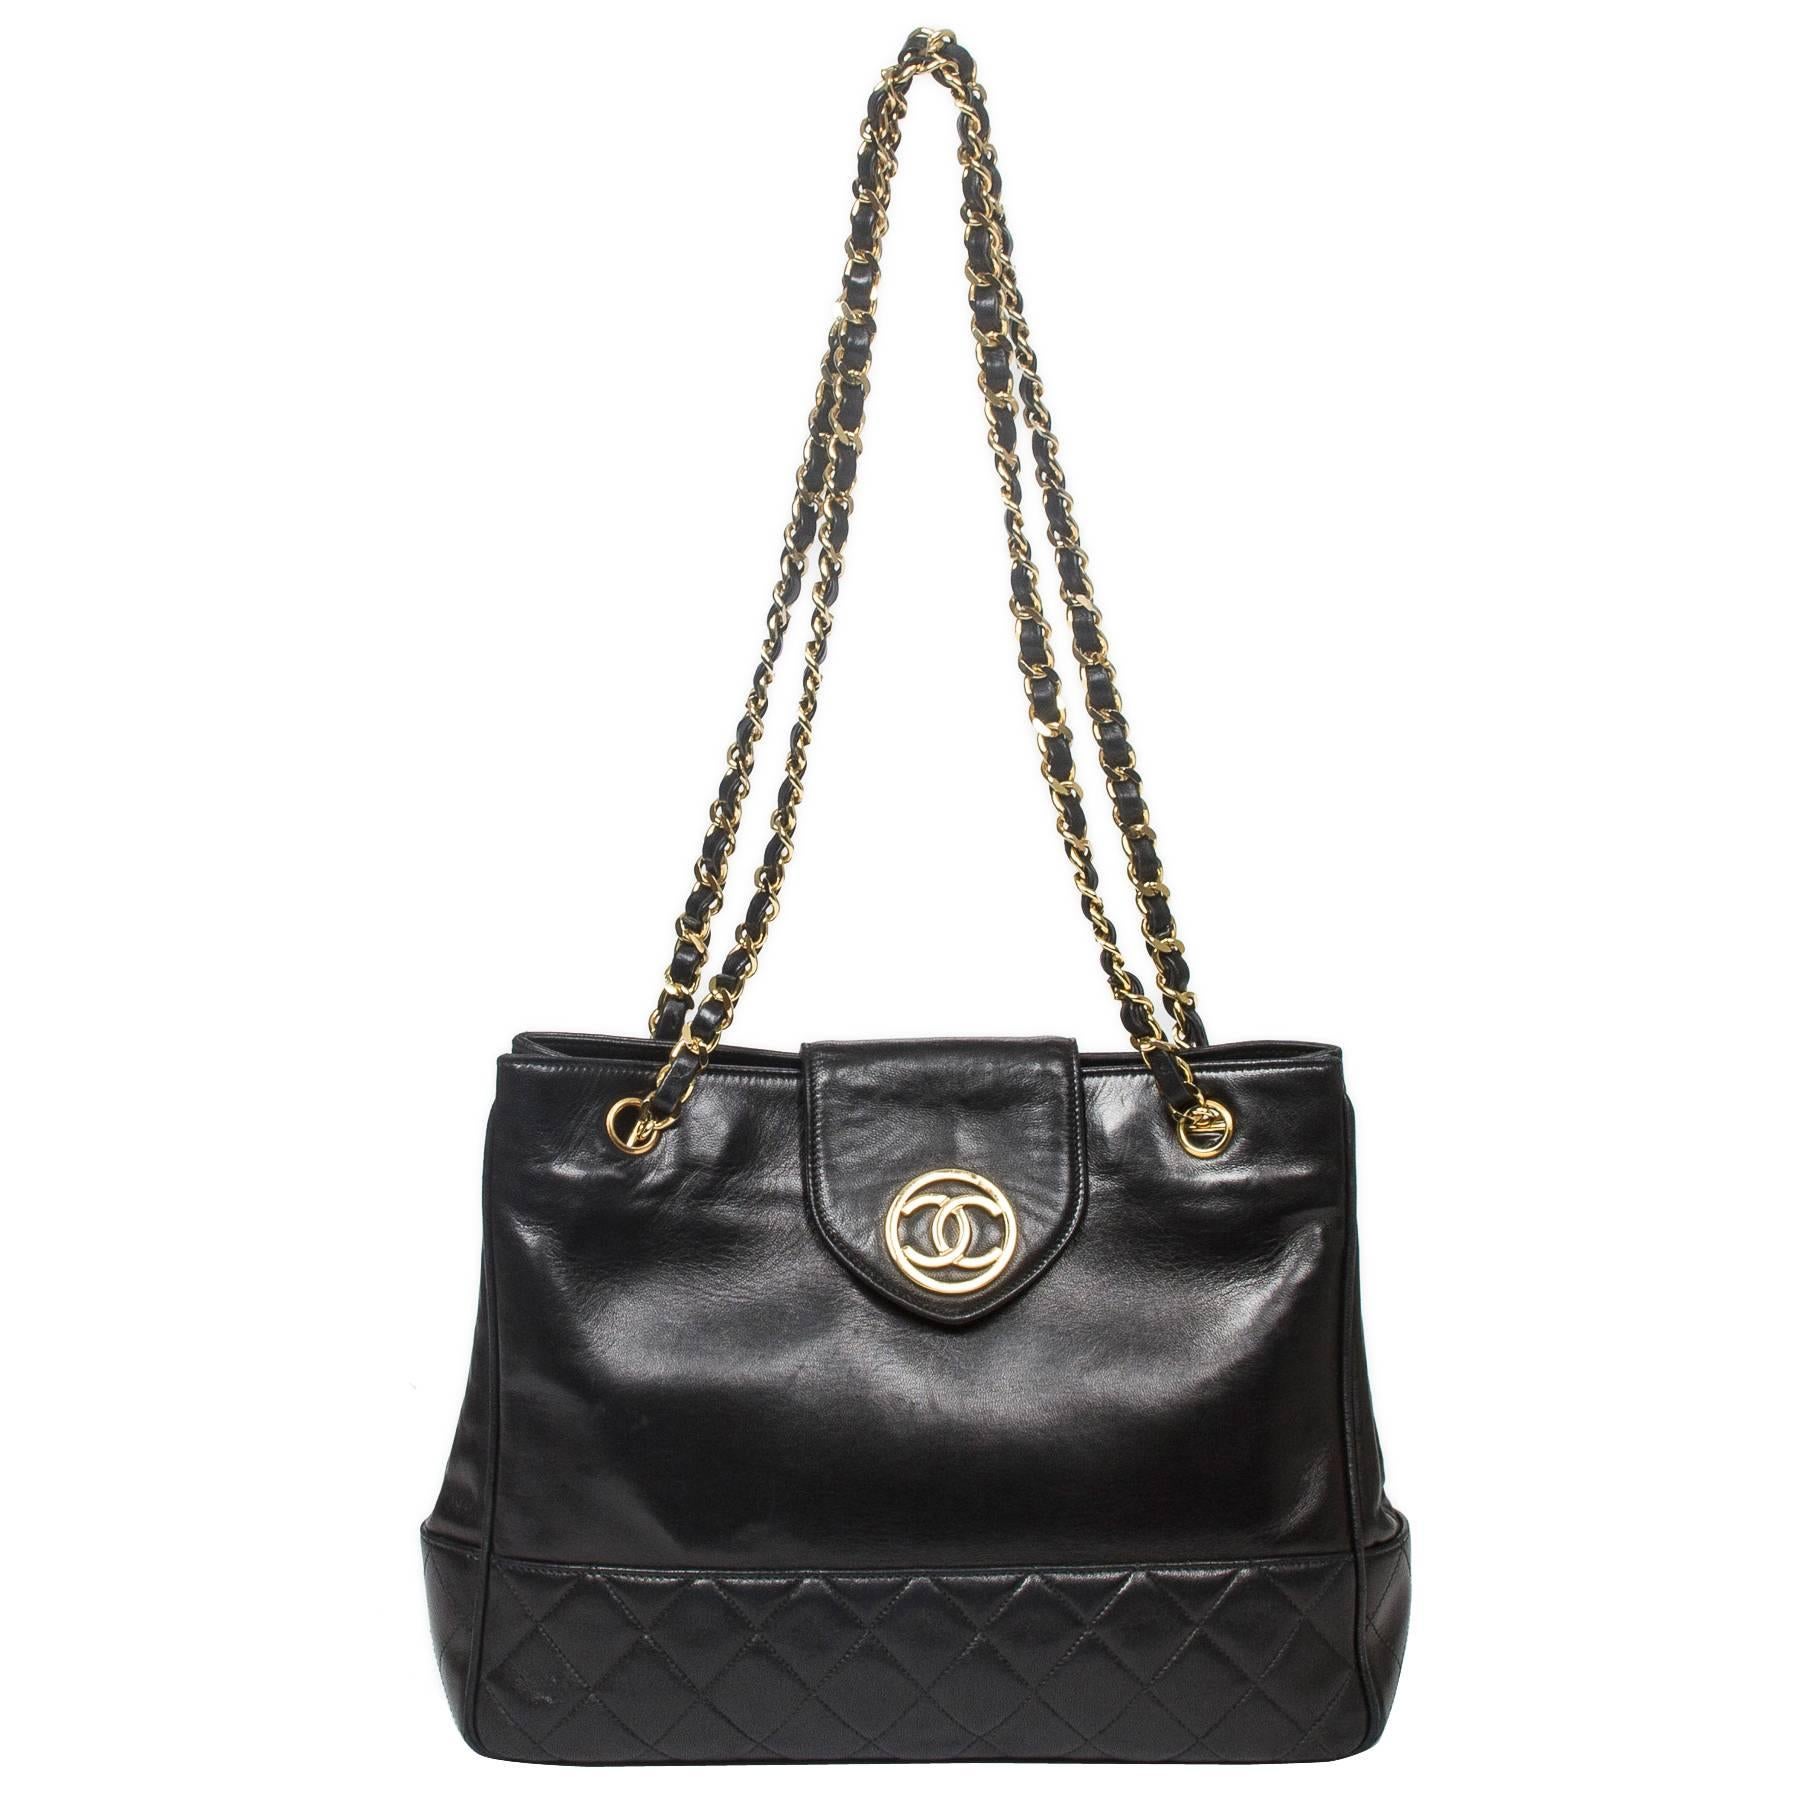 Chanel - Vintage Tote Black Leather